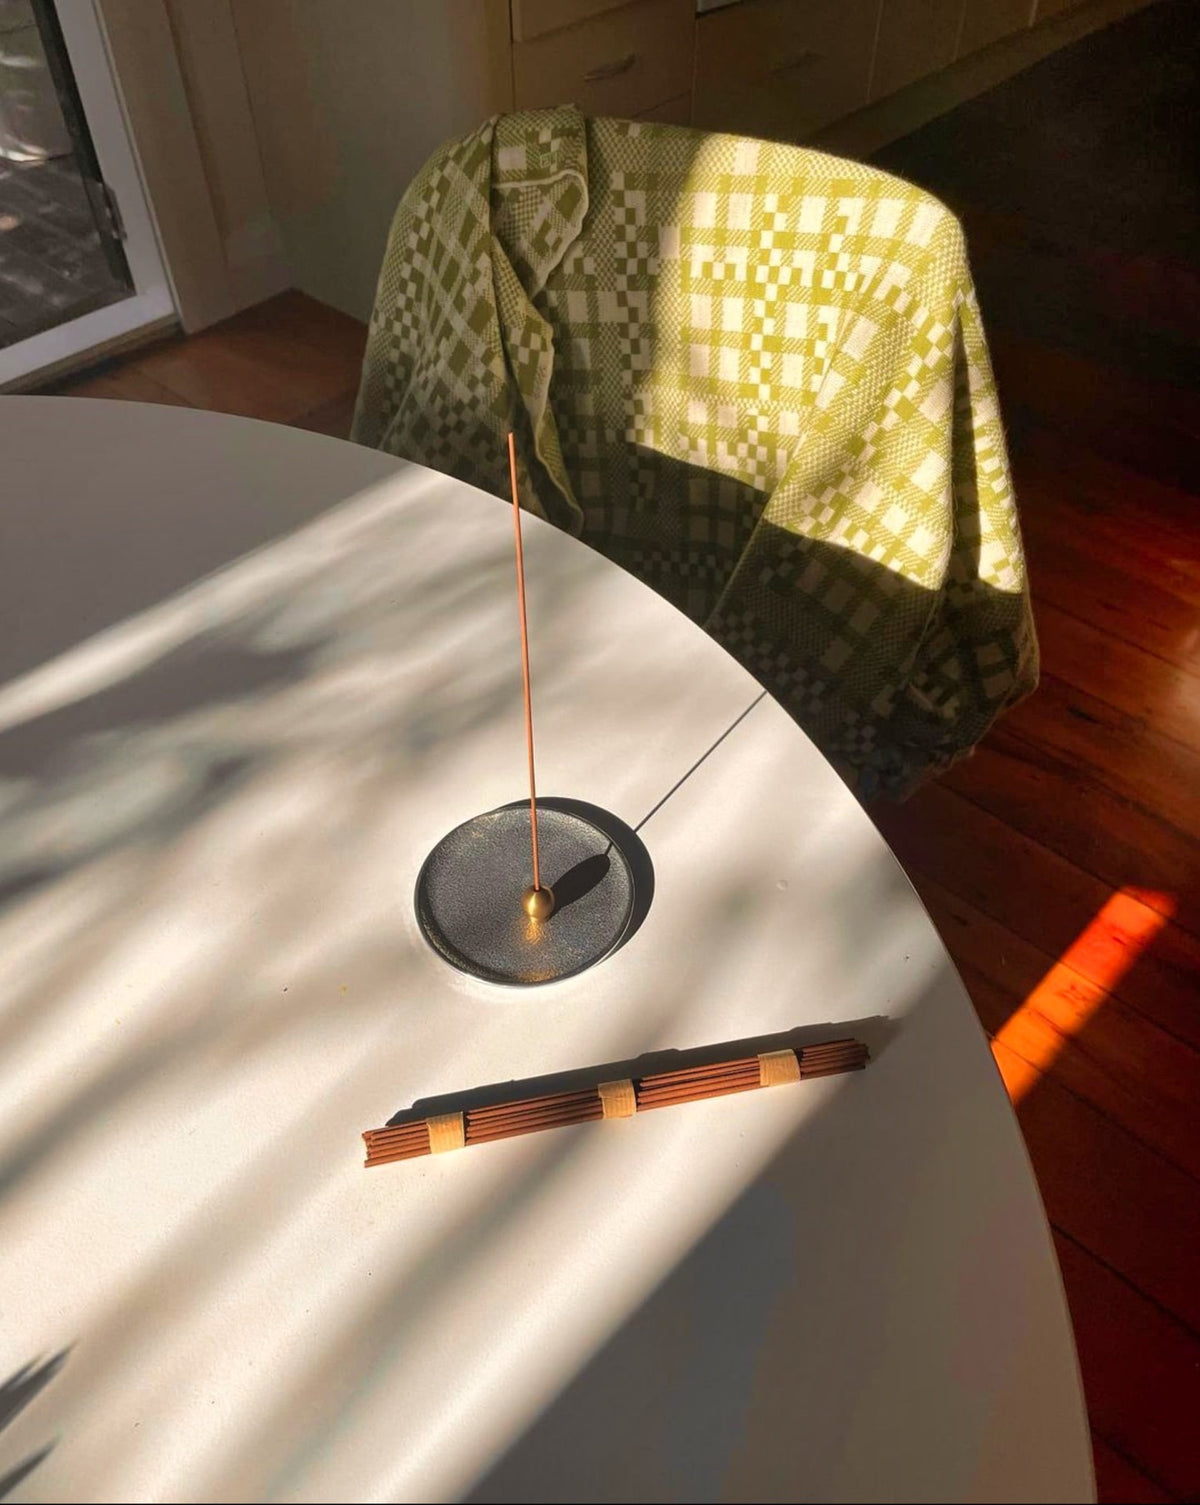 A Senko Brass Ball Incense Holder on a white table.